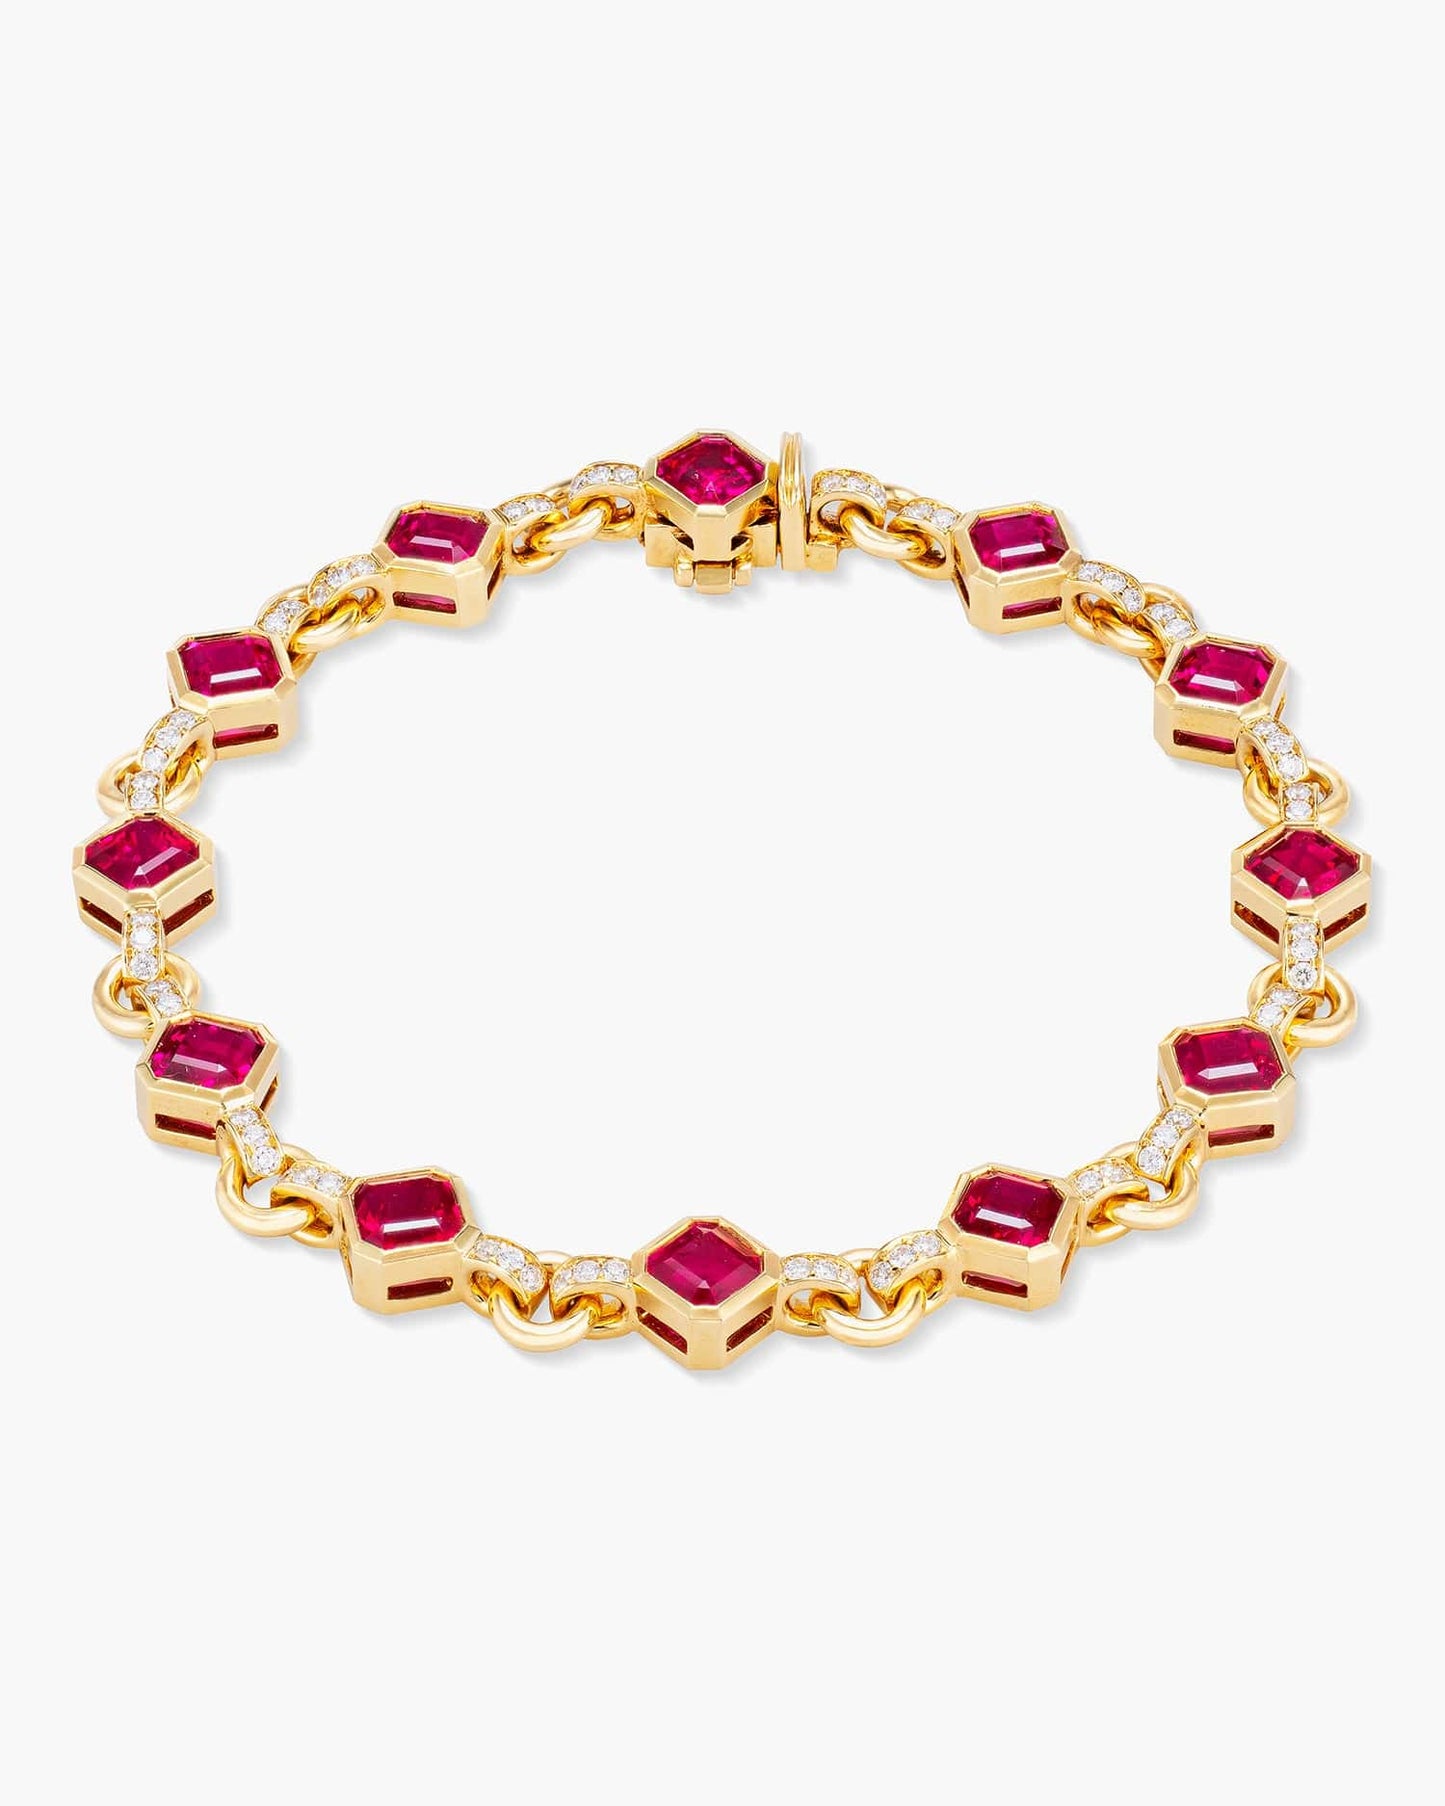 Burmese Ruby and Diamond Bracelet